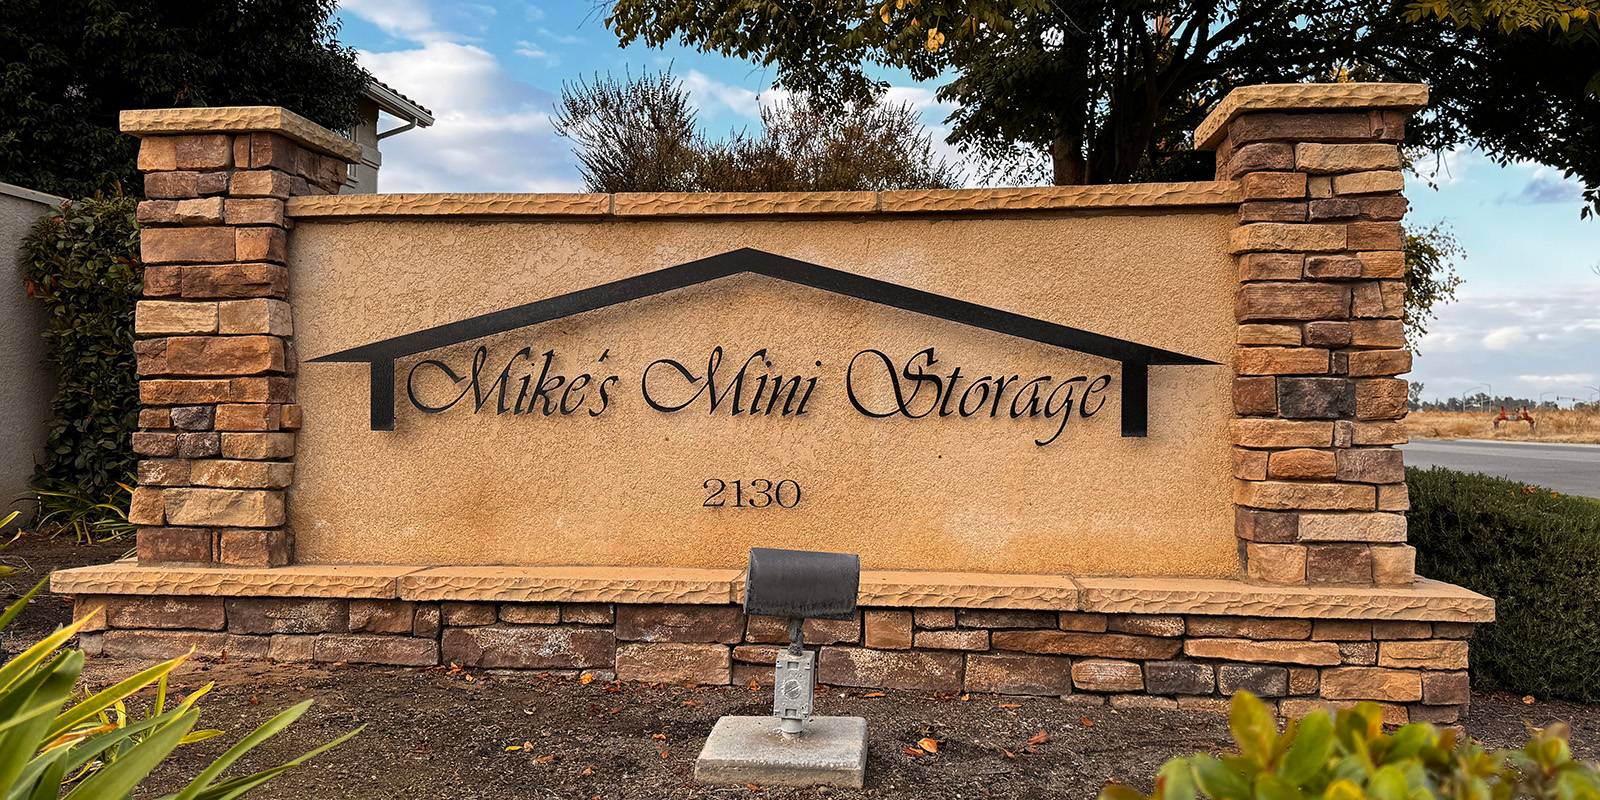 Mike's Mini Storage street sign